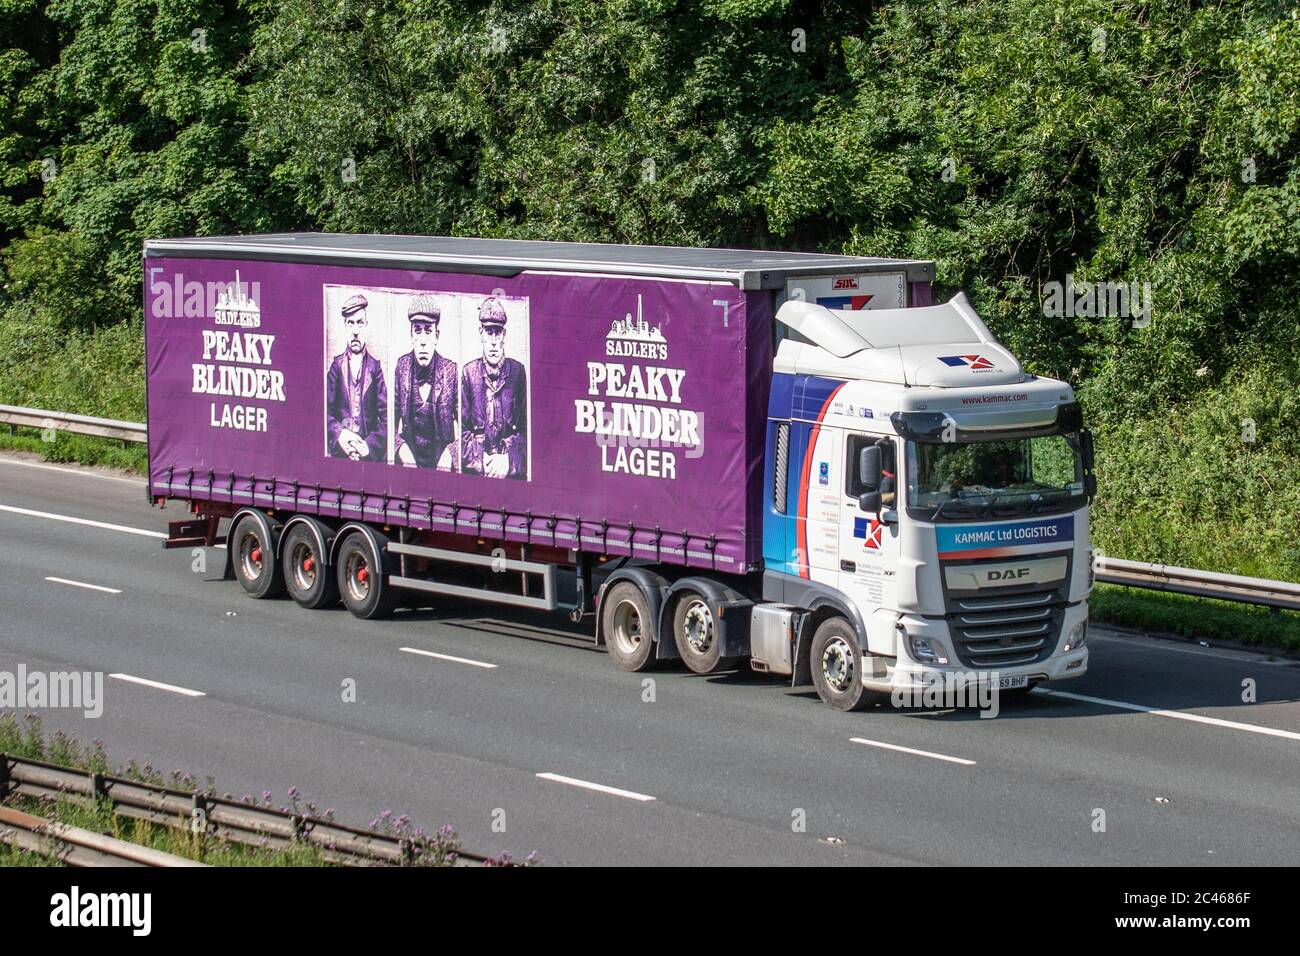 Sadler's Peaky Blinder Lager; Haulage delivery trucks, lorry, transportation, truck, cargo carrier, DAF vehicle, European commercial transport industry HGV, M6 at Manchester, UK Stock Photo